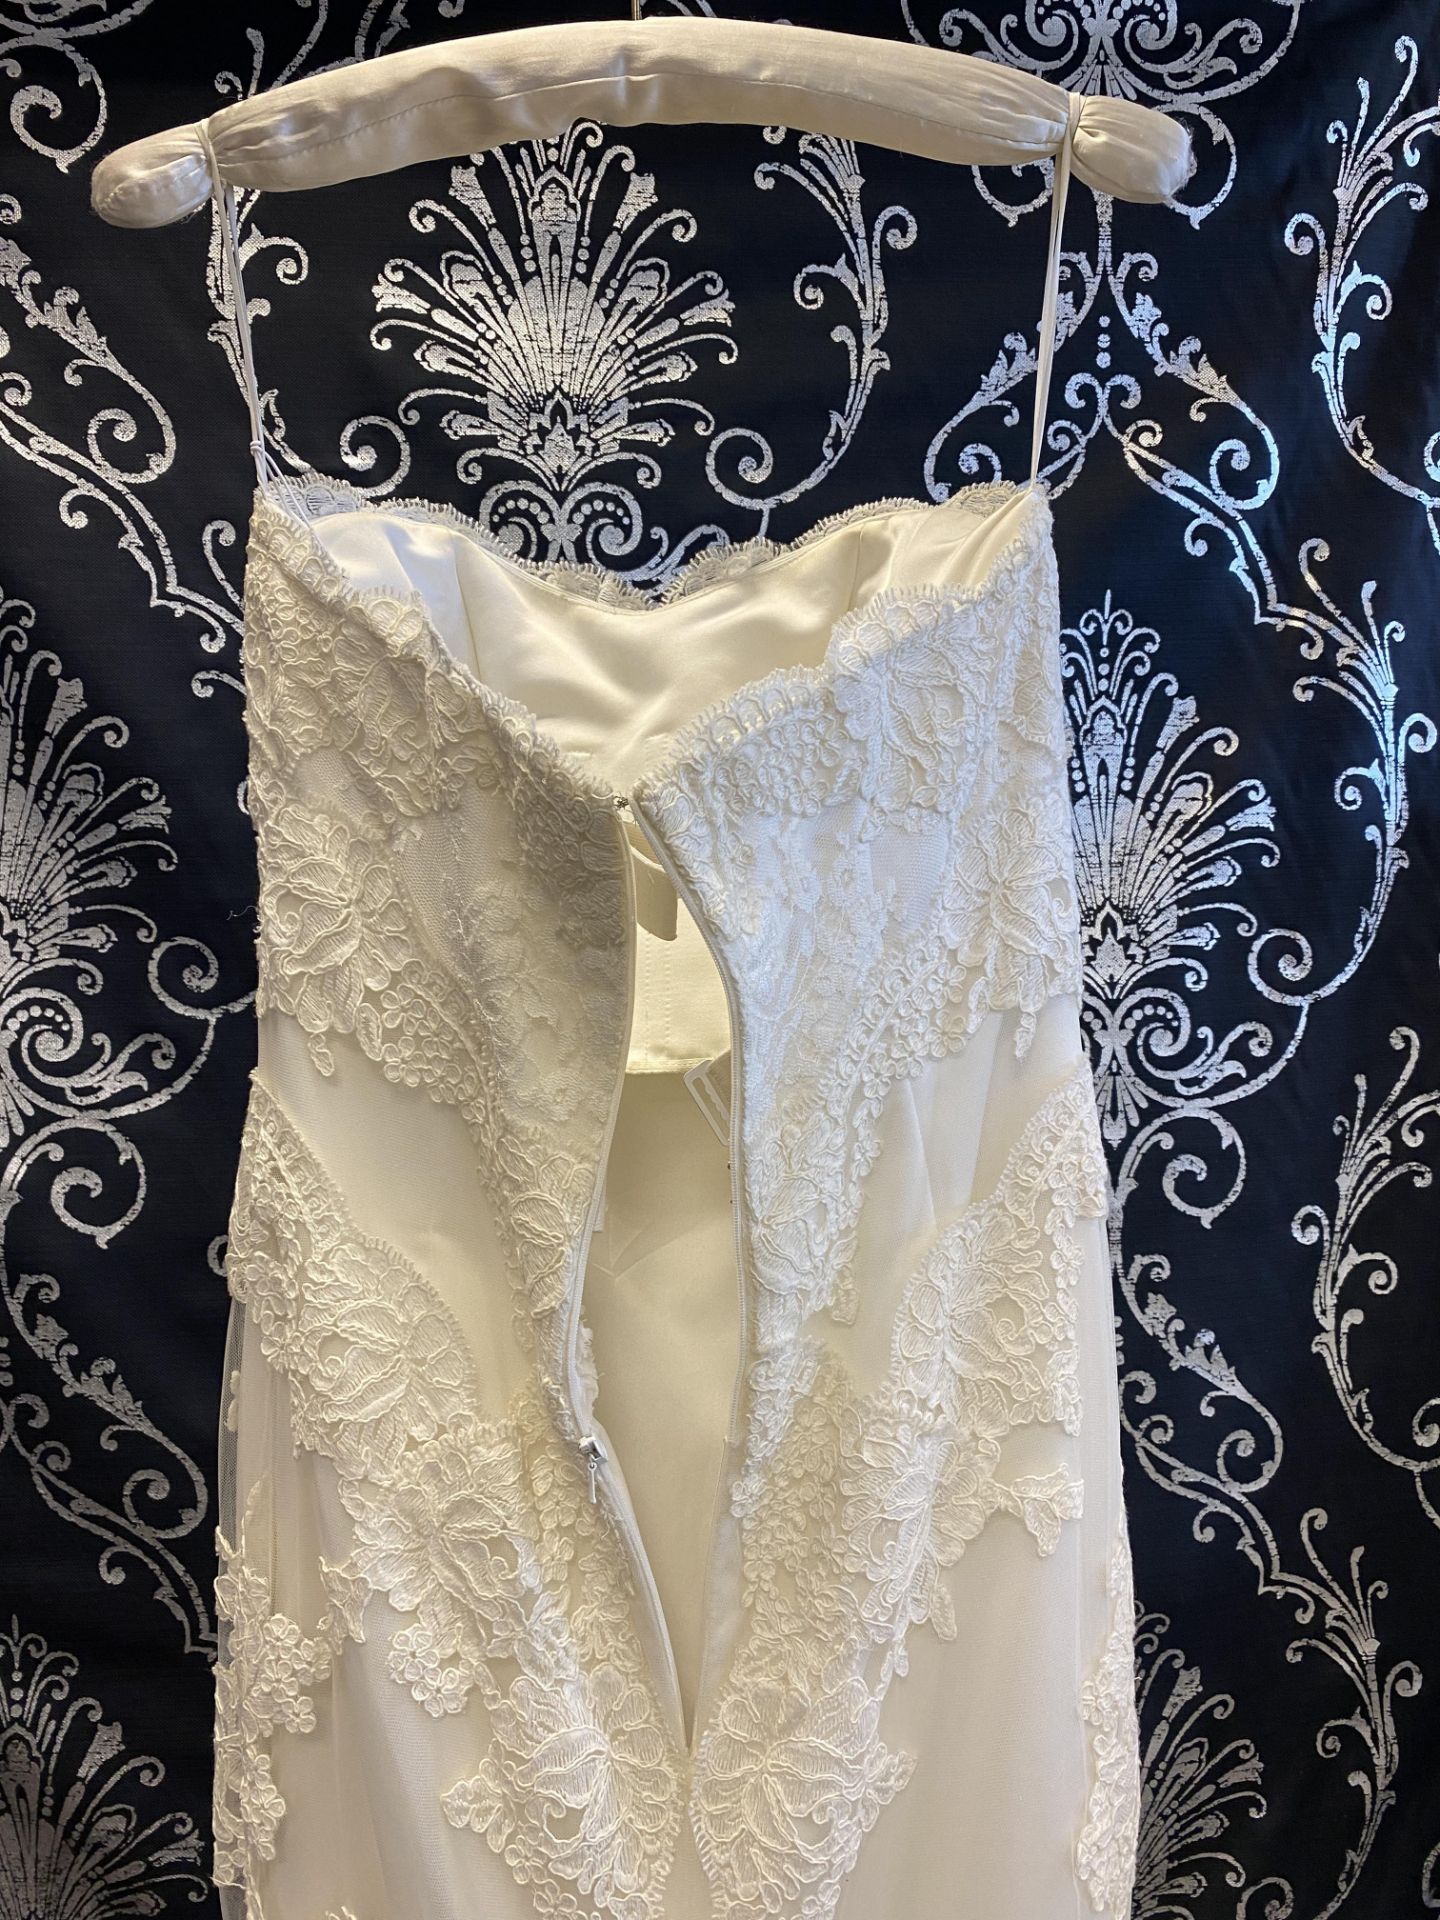 1 x LUSAN MANDONGUS 'Valli' Stunning Strapless Lace Overlay Designer Wedding Dress RRP £1,575 UK10 - Image 5 of 9